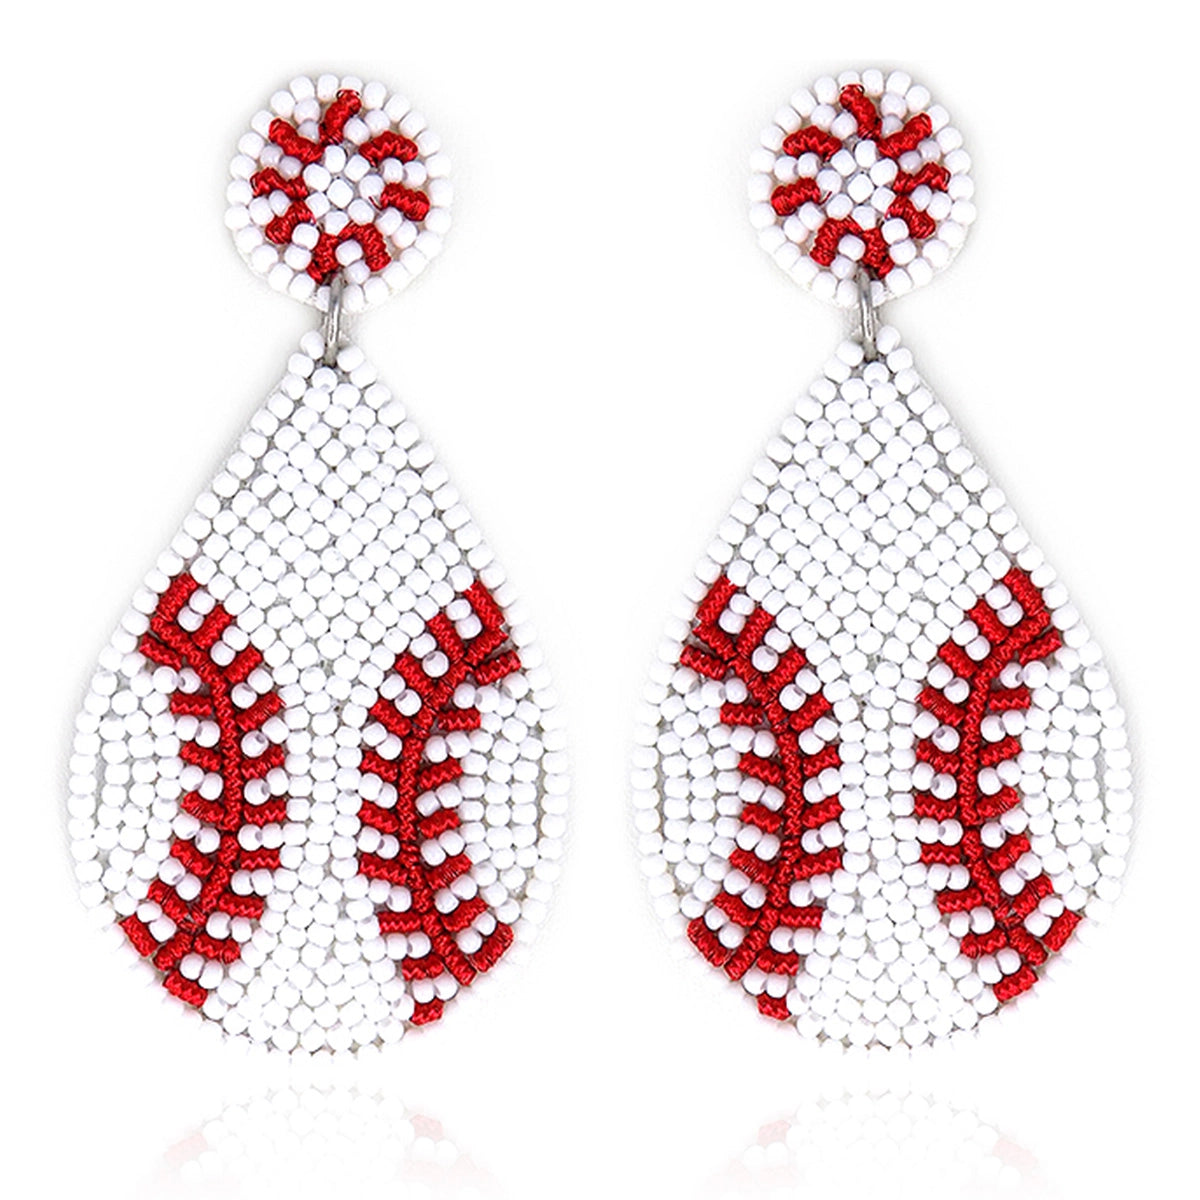 Handmade Pierced Teardrop Softball/Baseball Earrings